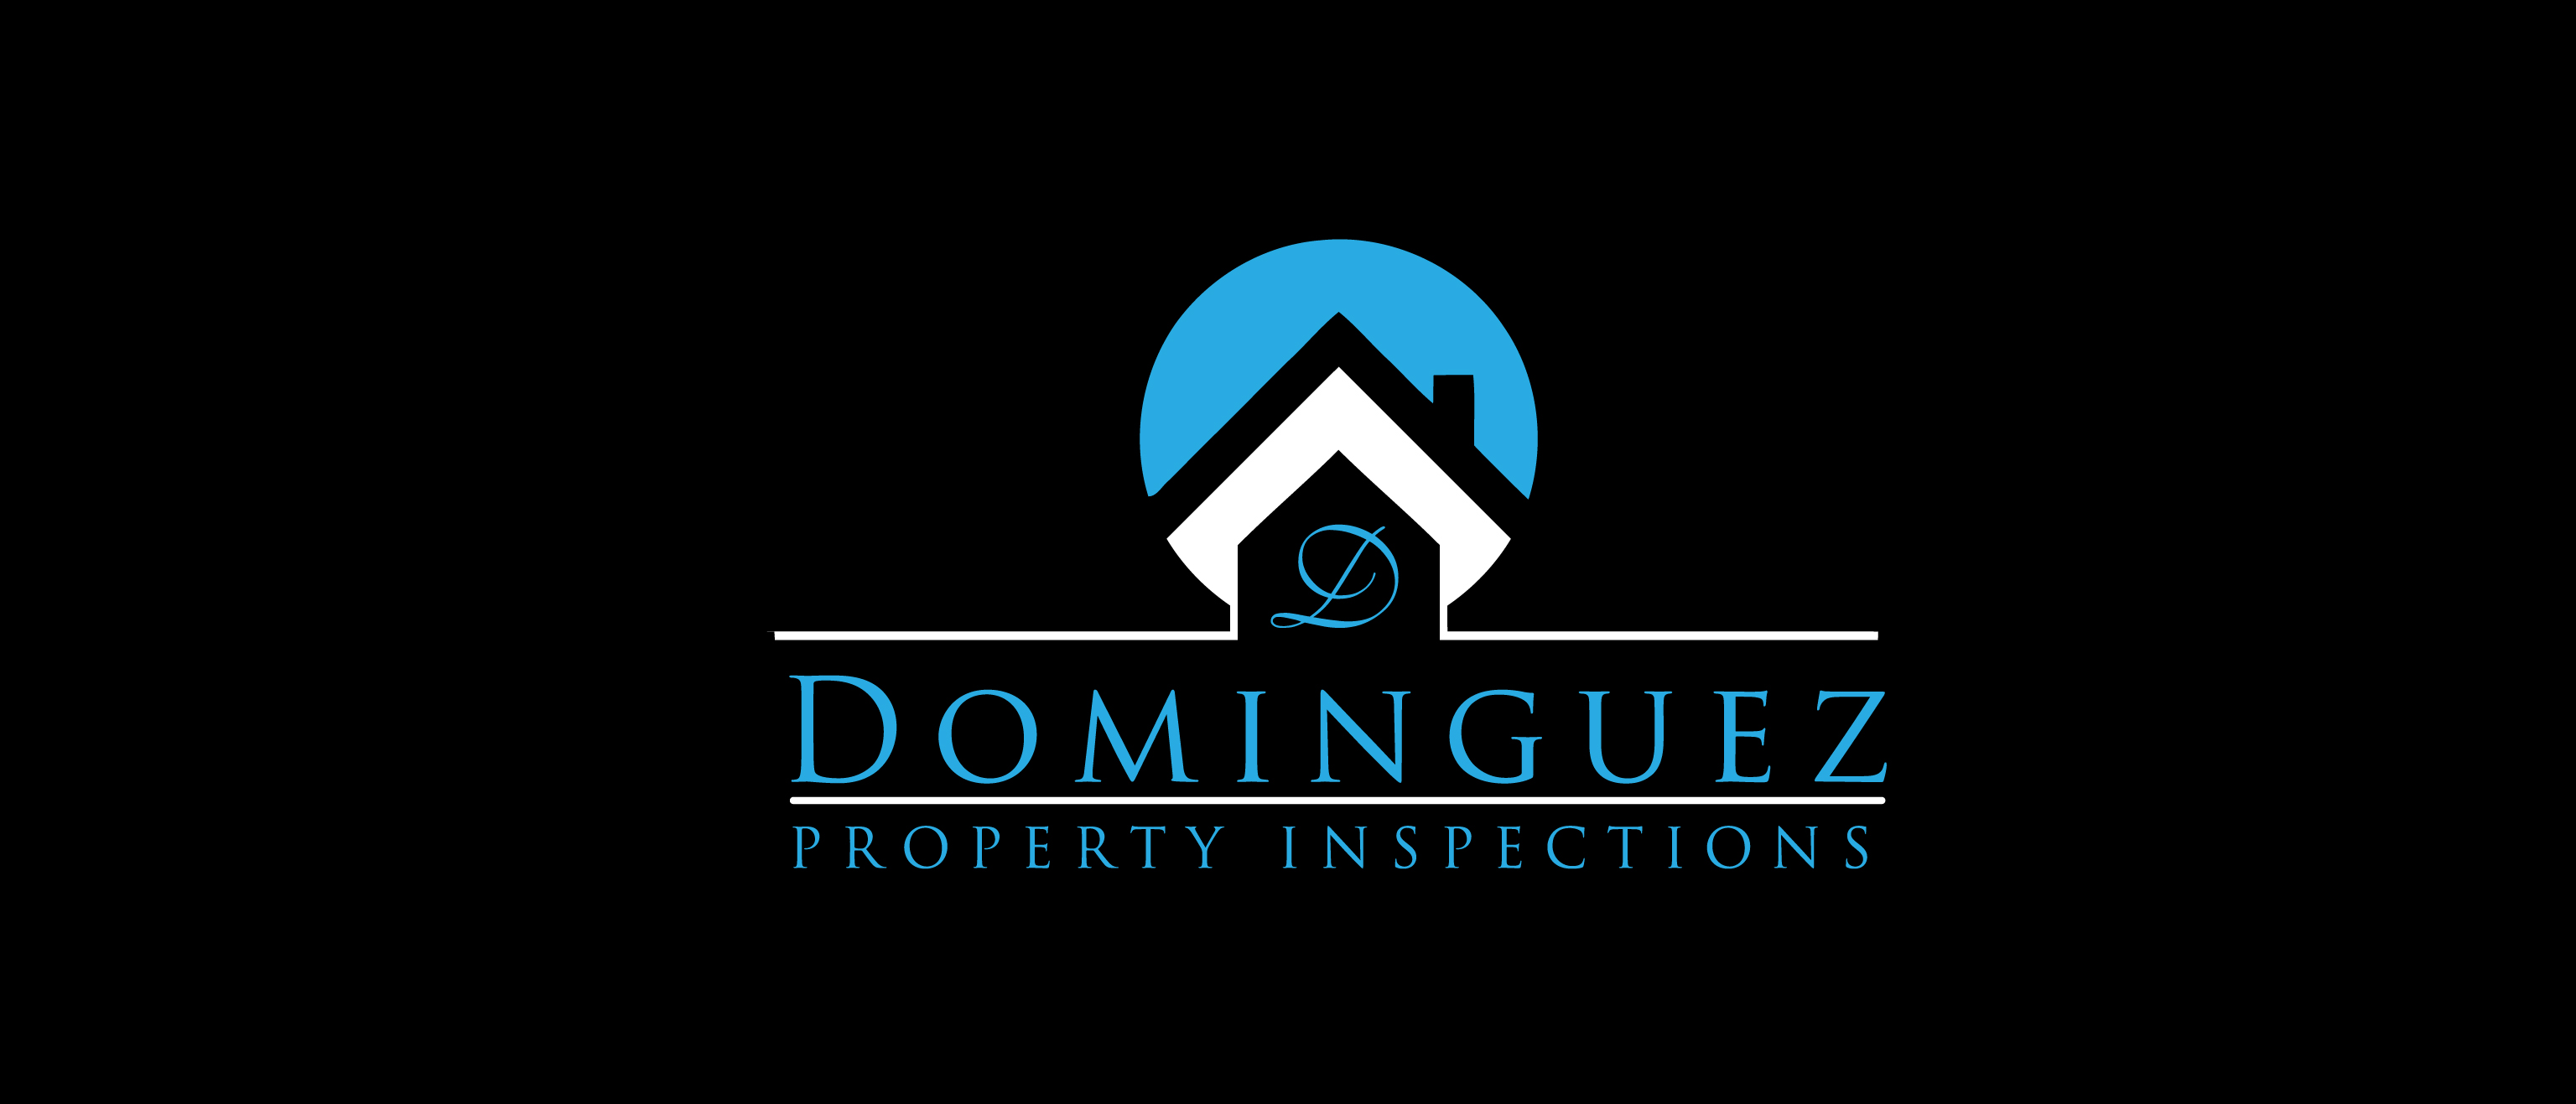 Dominguez Property Inspections Logo